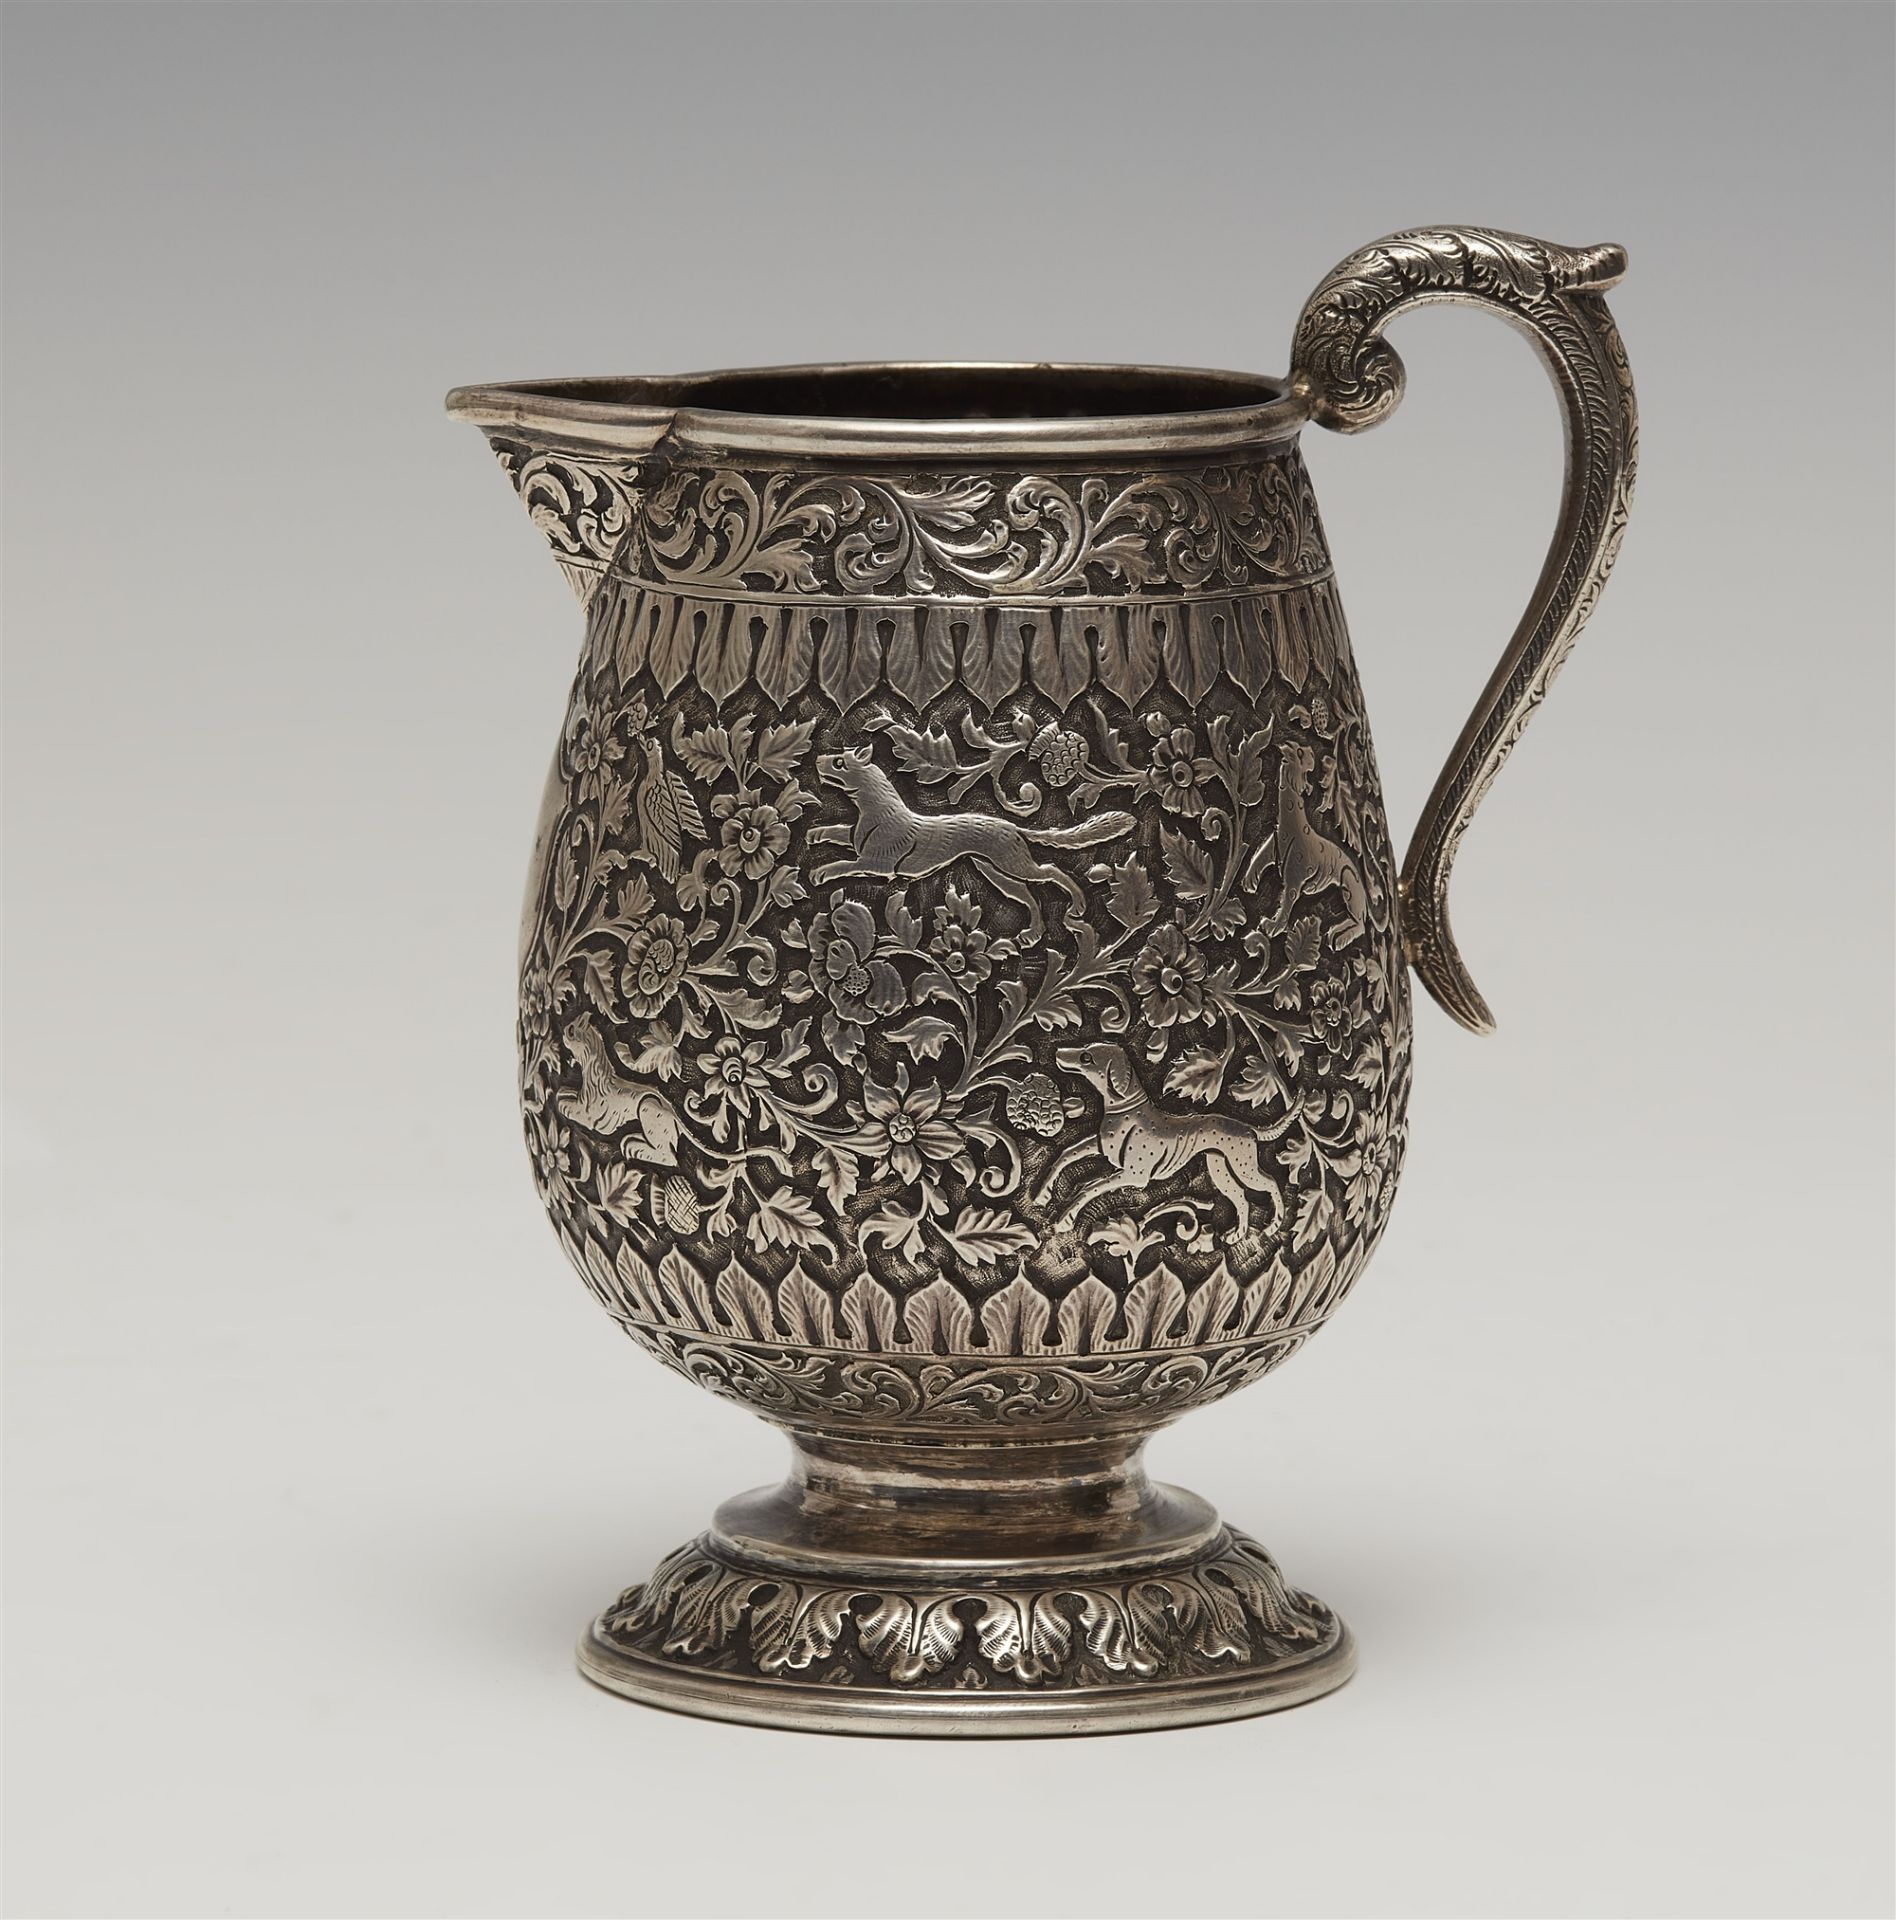 A superb Kutch silver milk jug. Late 19th century